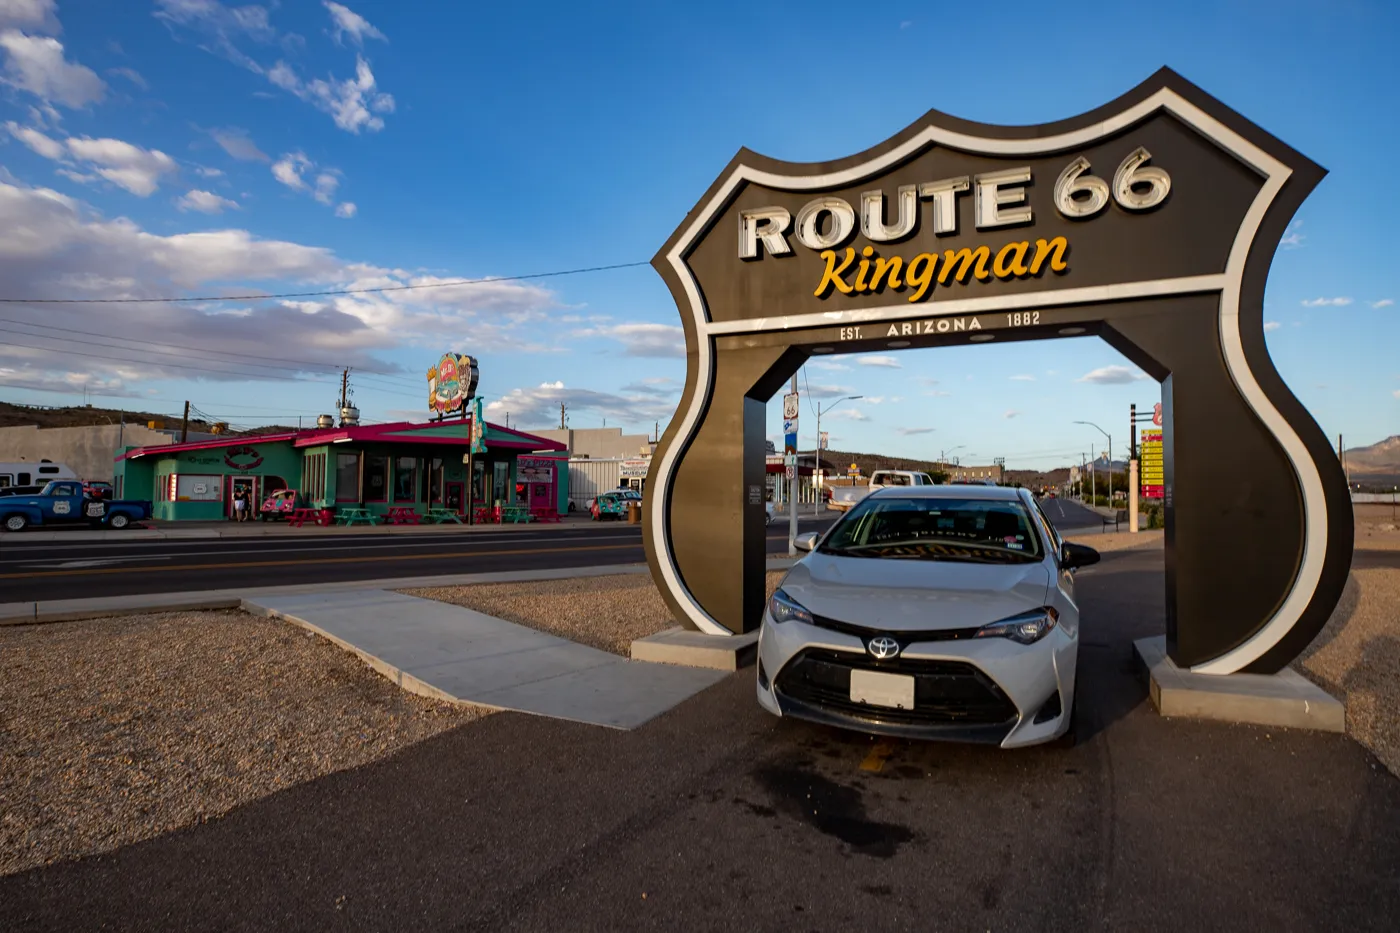 Route 66 Drive-Thru Shield in Kingman, Arizona - Route 66 Roadside Attraction